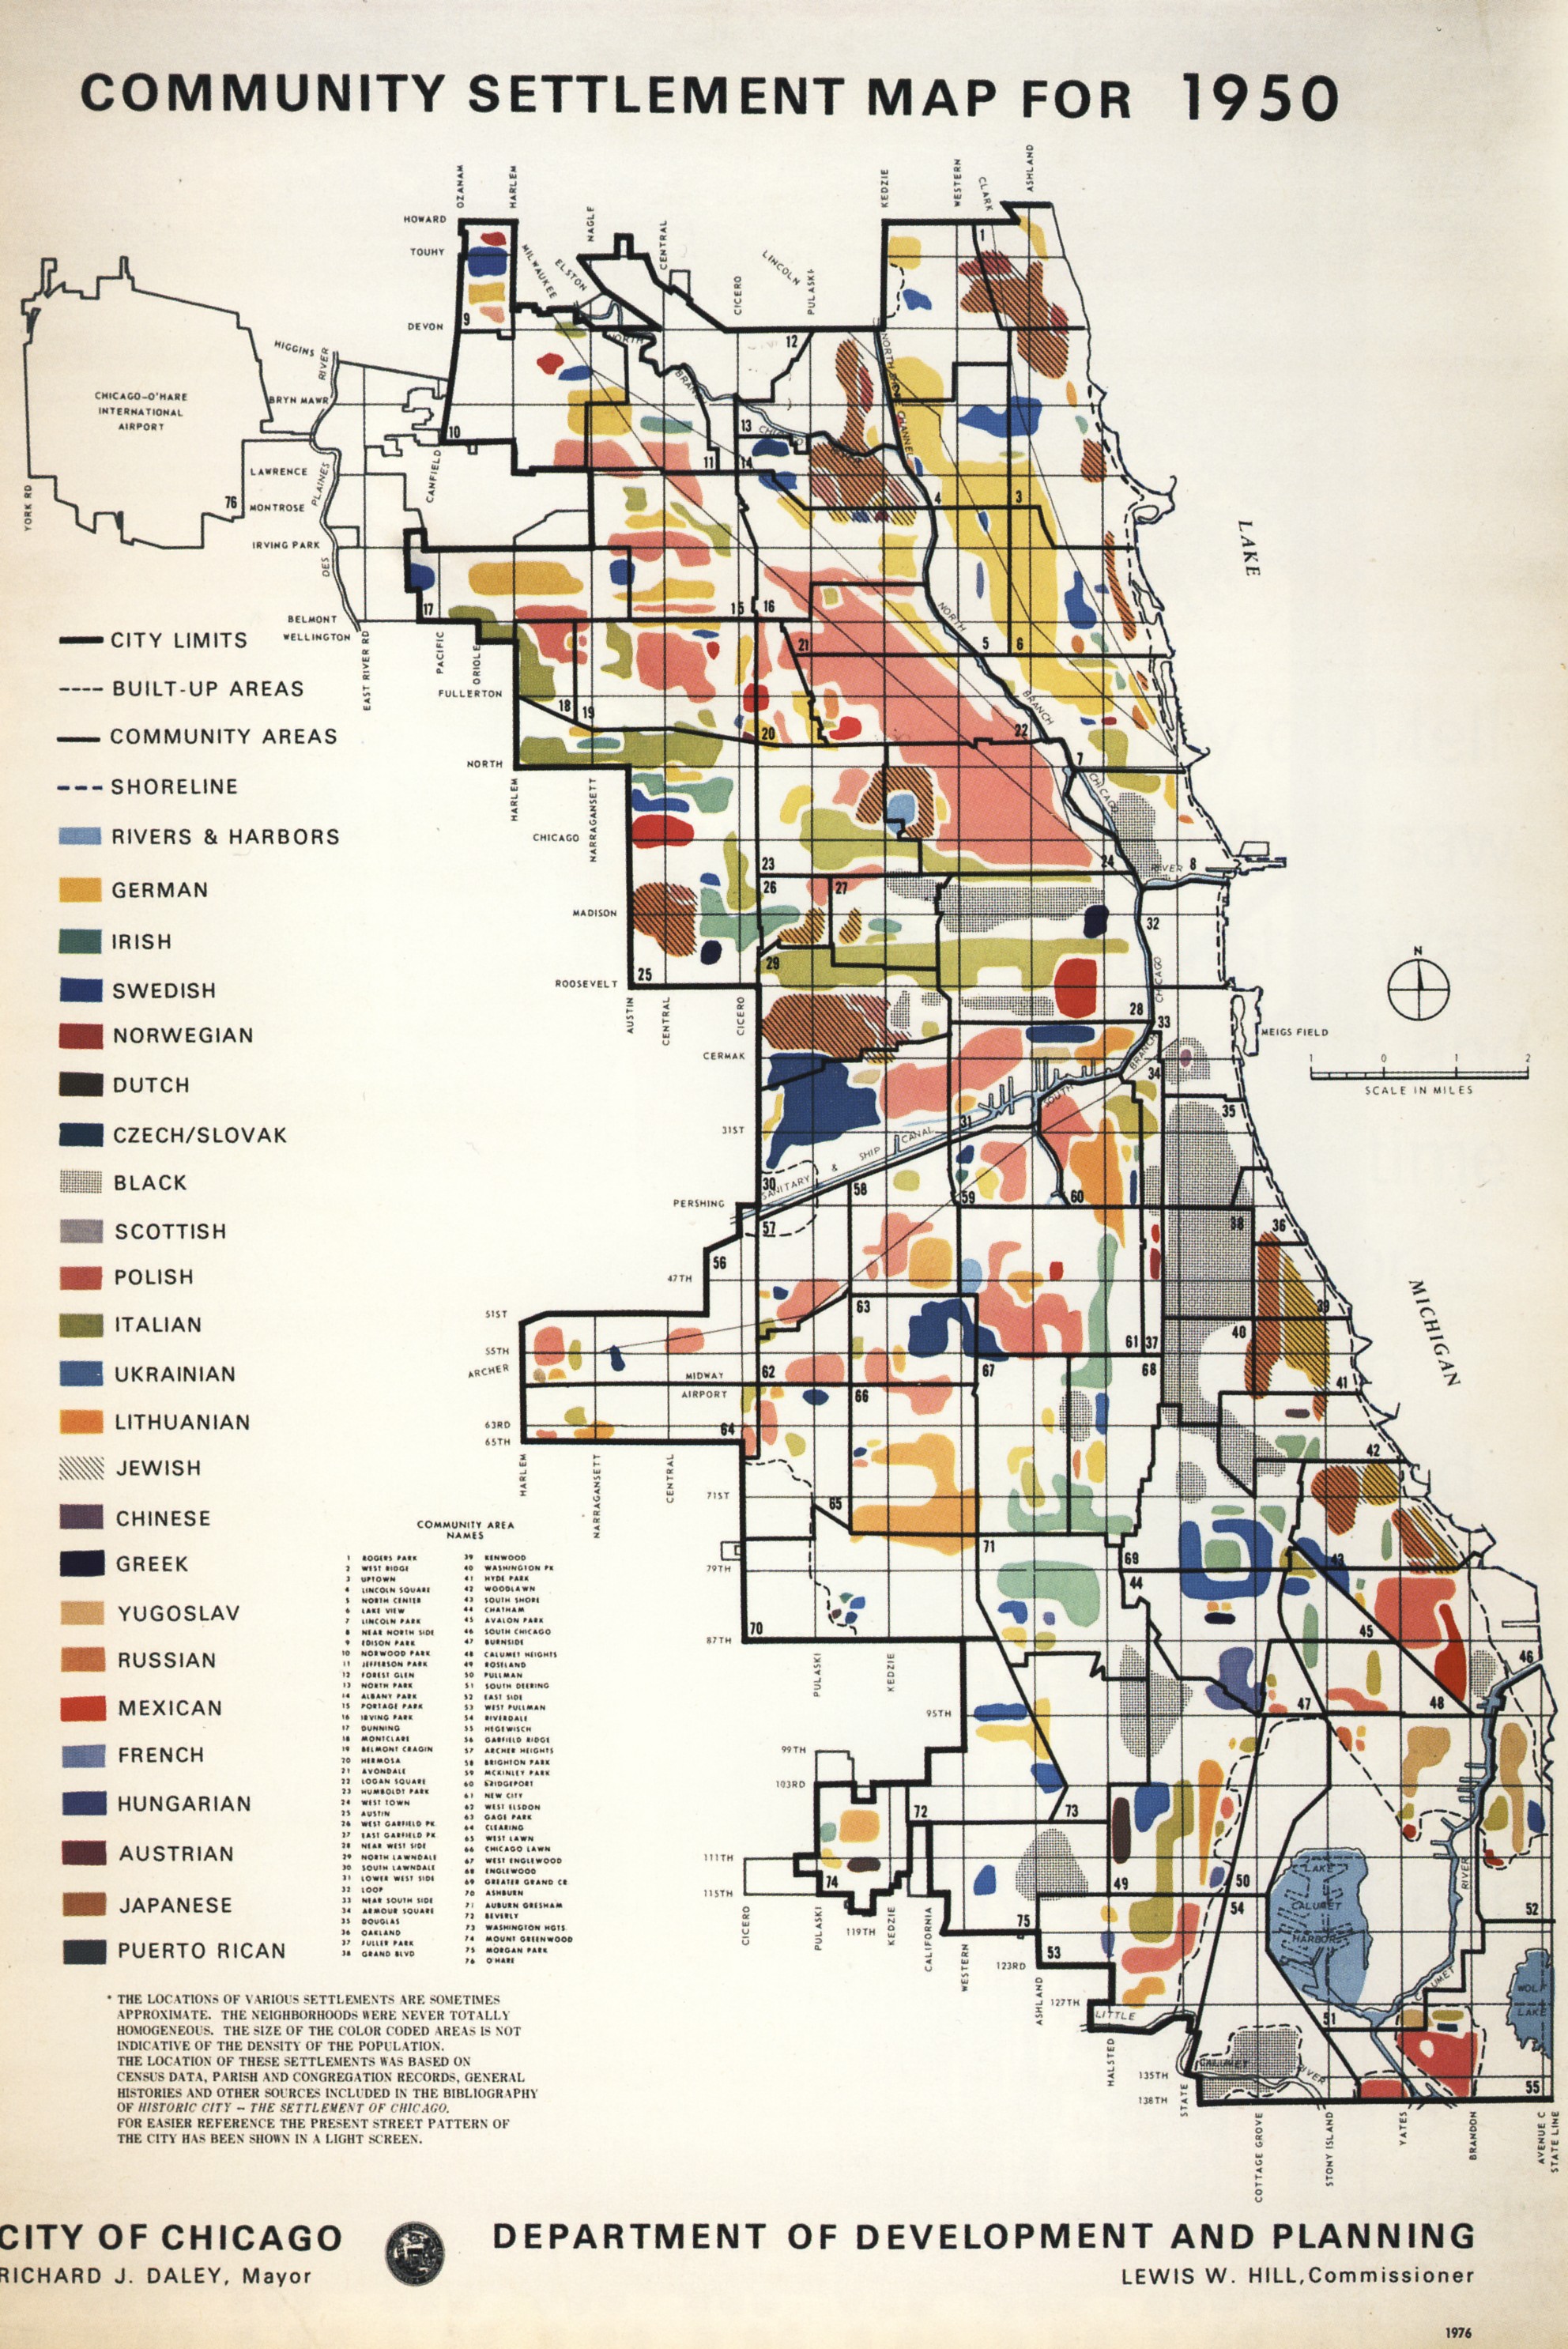 Ethnic Map of Chicago by Neighborhood (1950) Source: Daniel Pogorzelski.